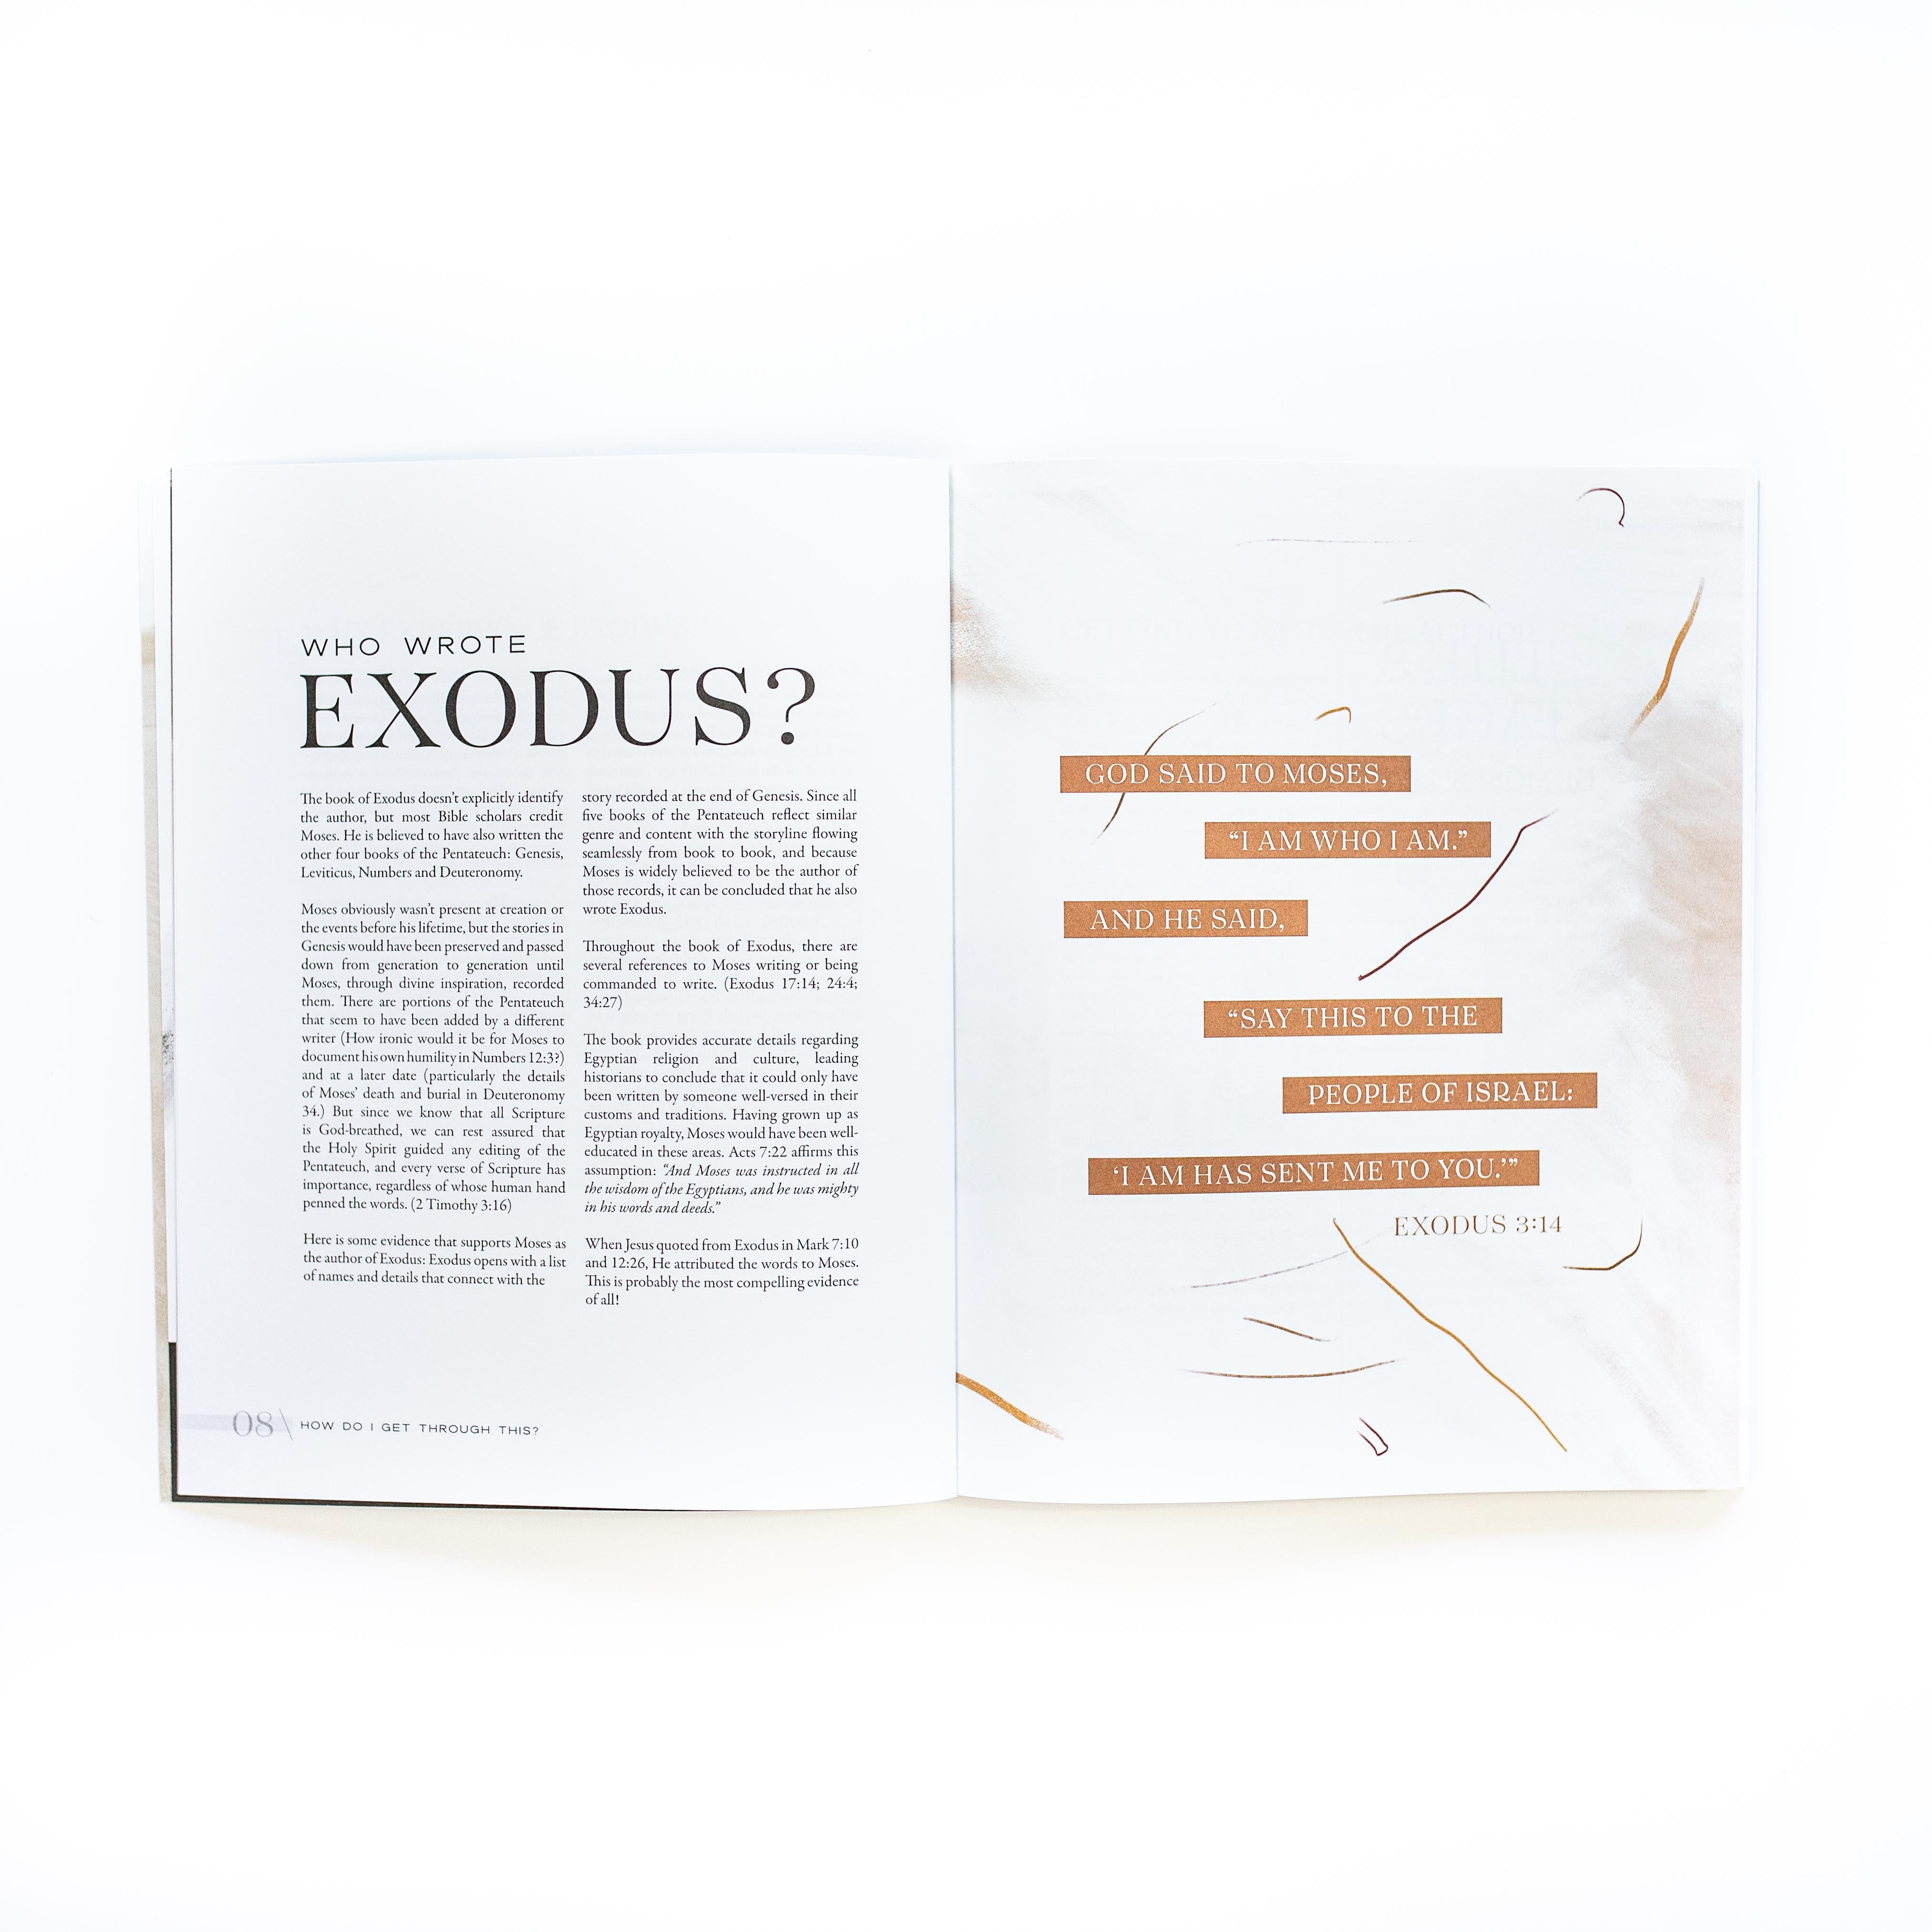 How Do I Get Through This? A Study of the Book of Exodus